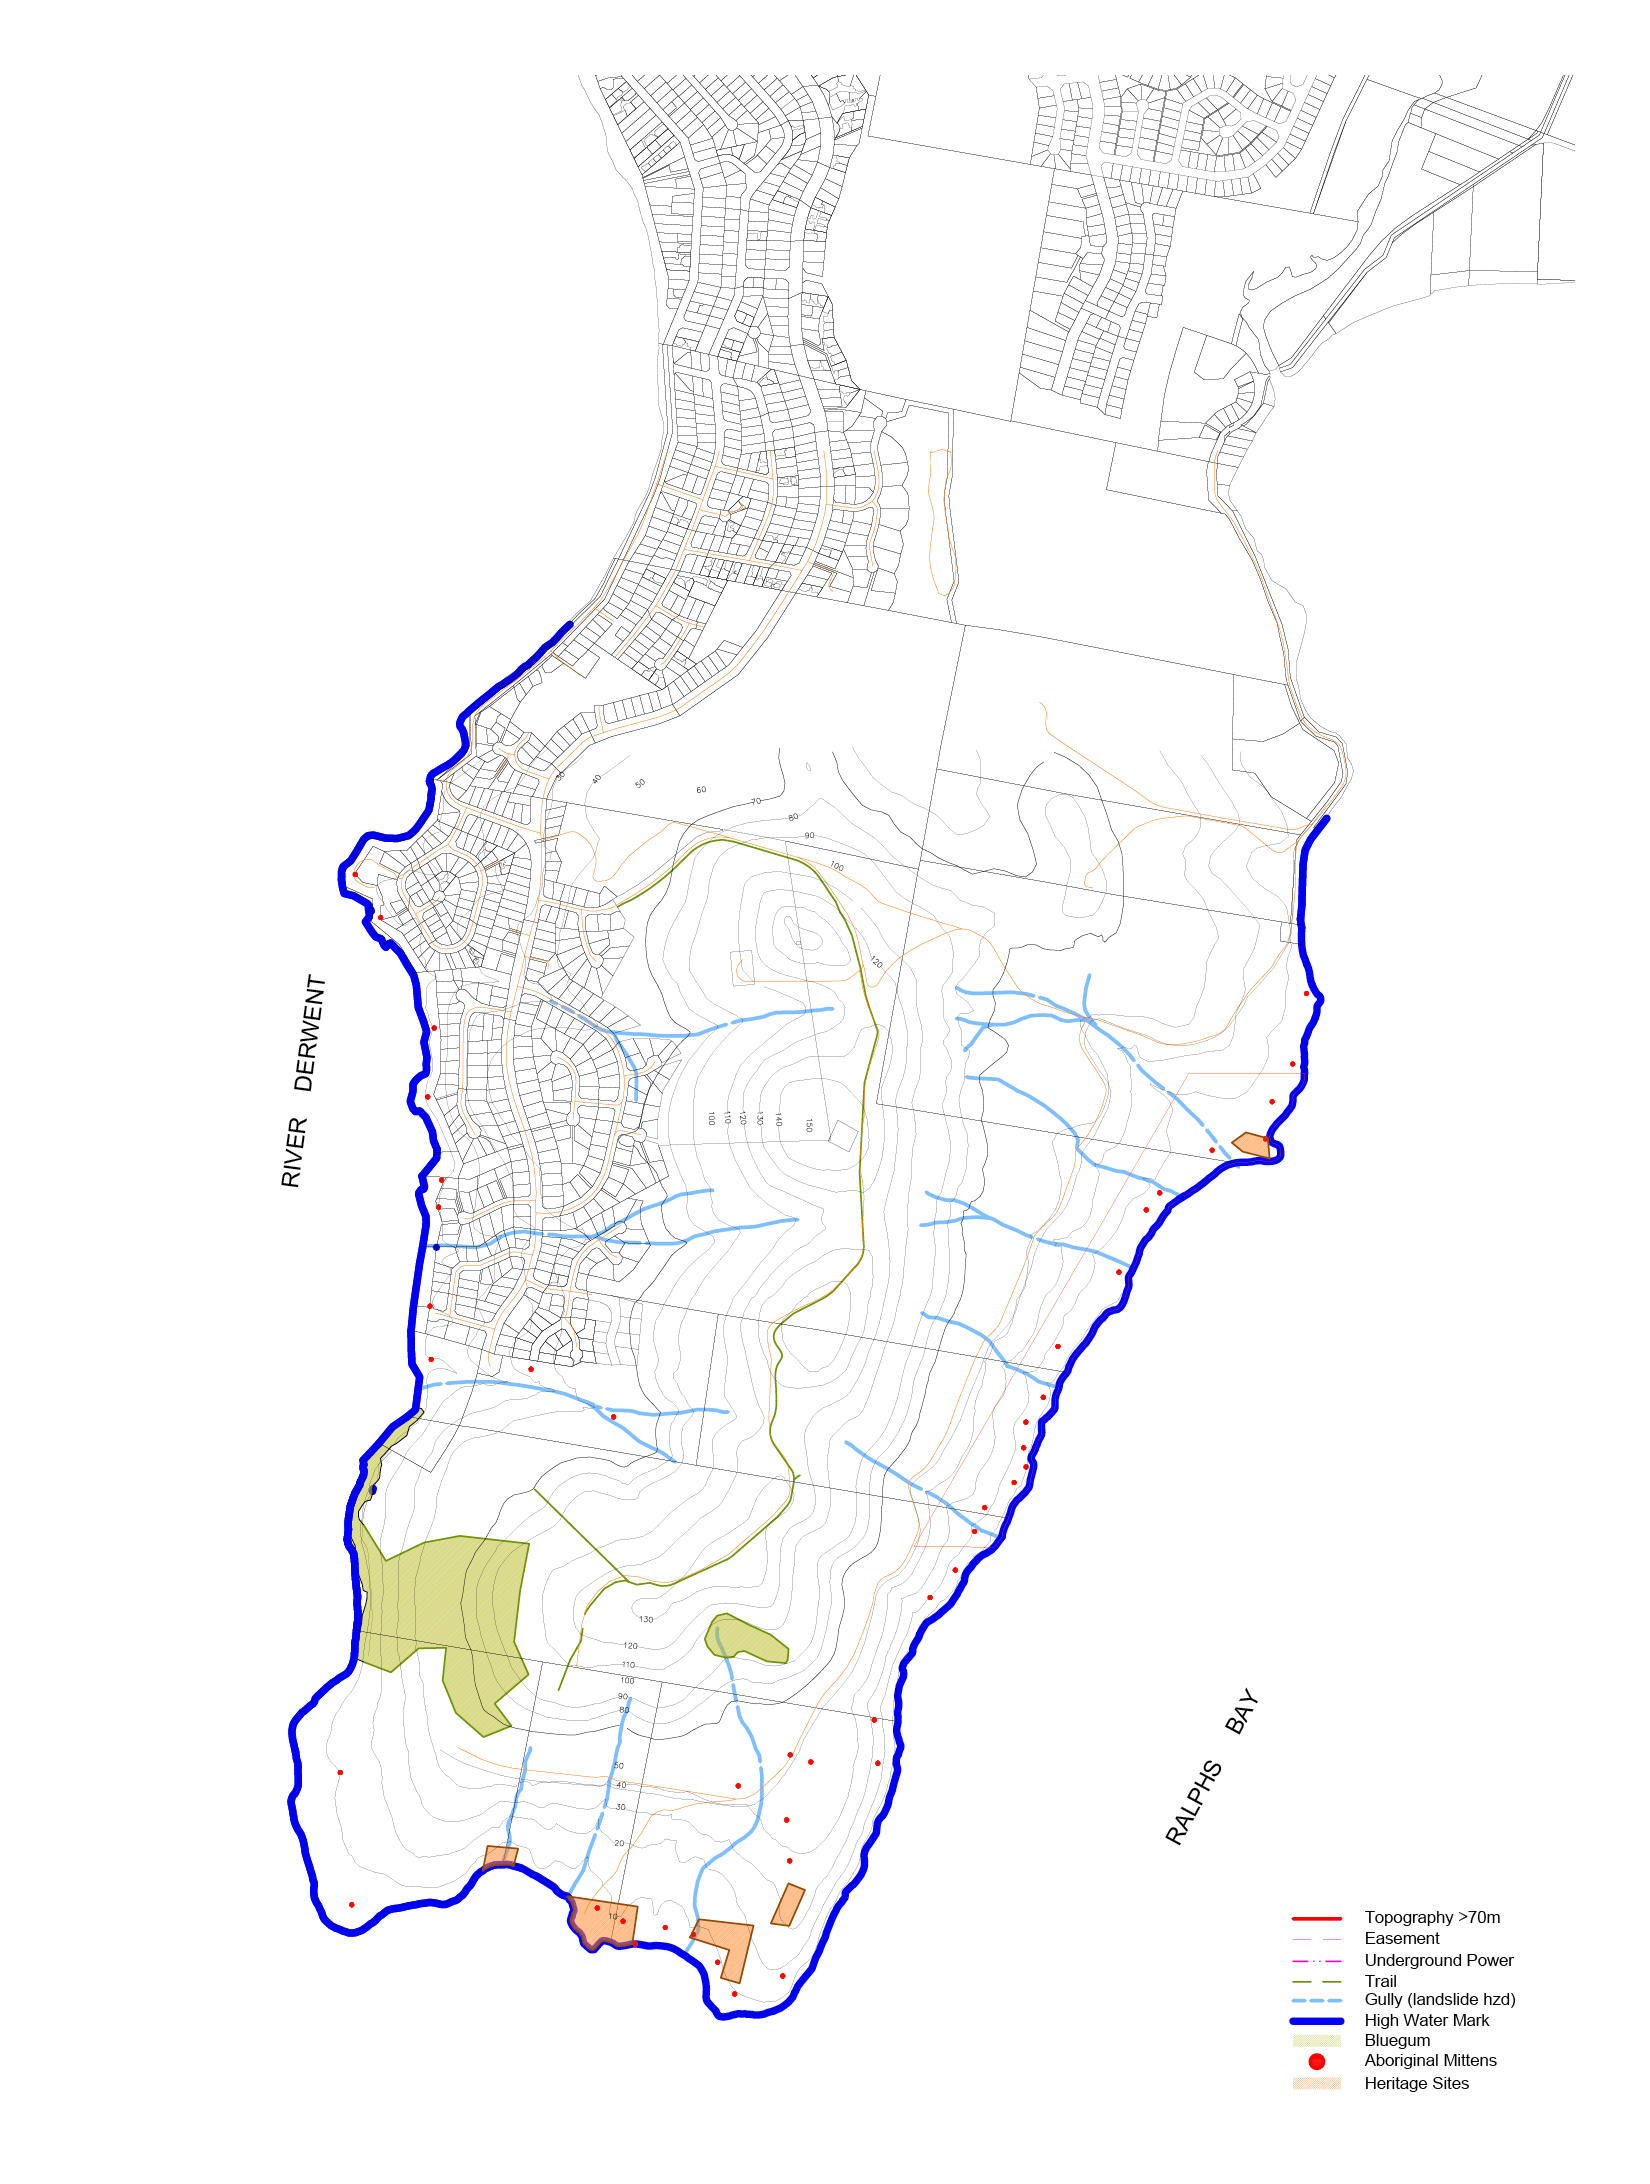 natural site constraints map